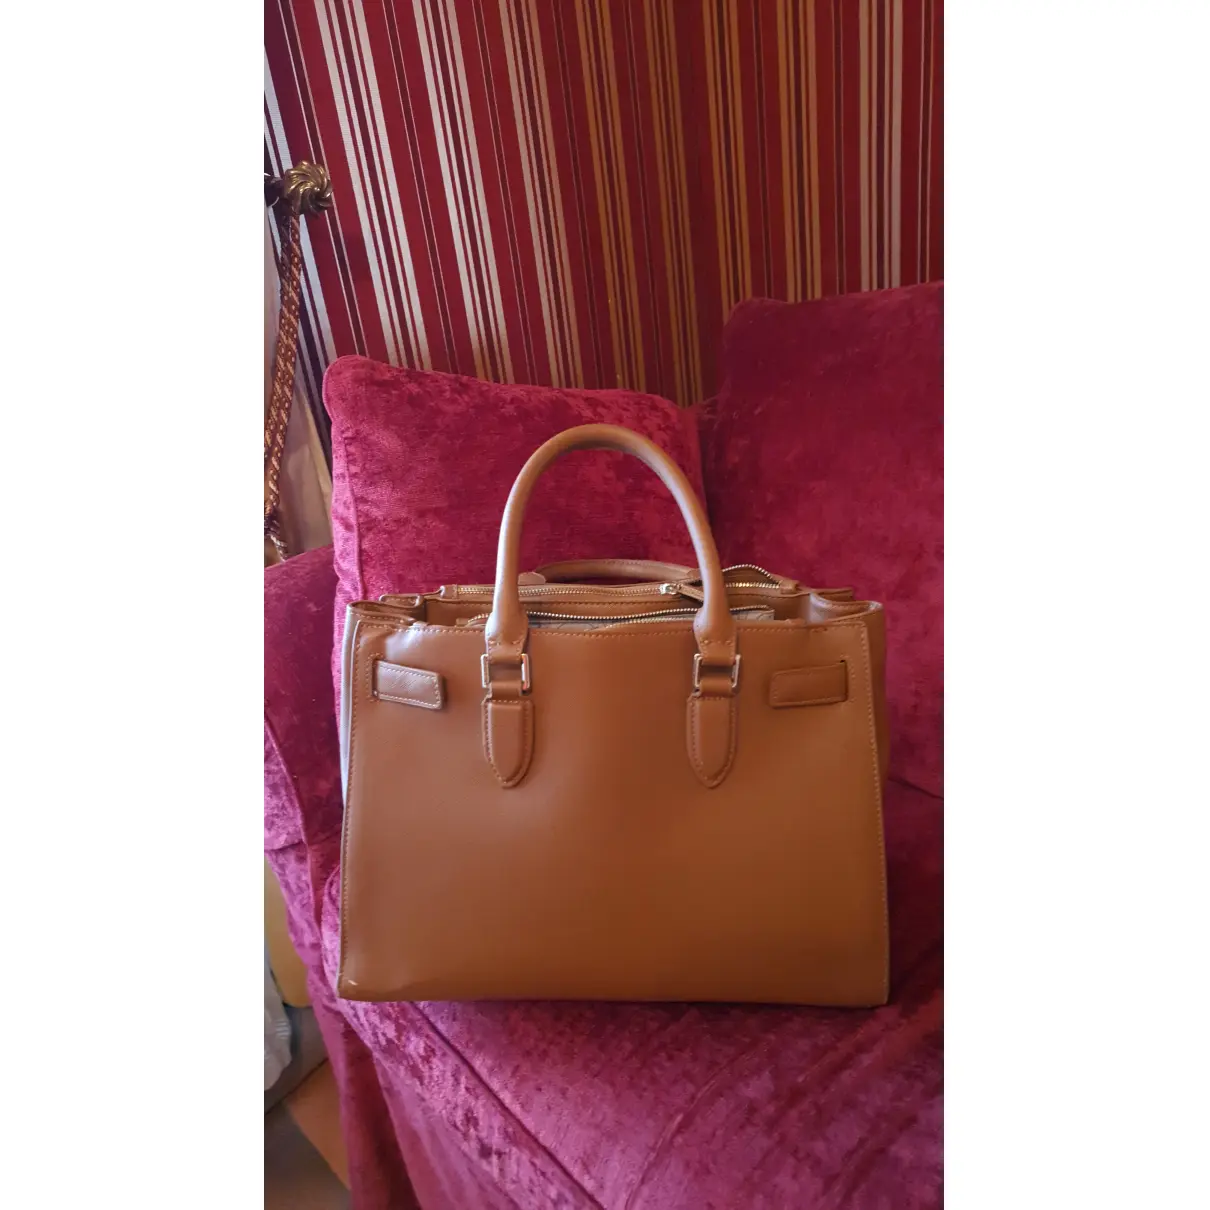 Buy Georges Rech Leather handbag online